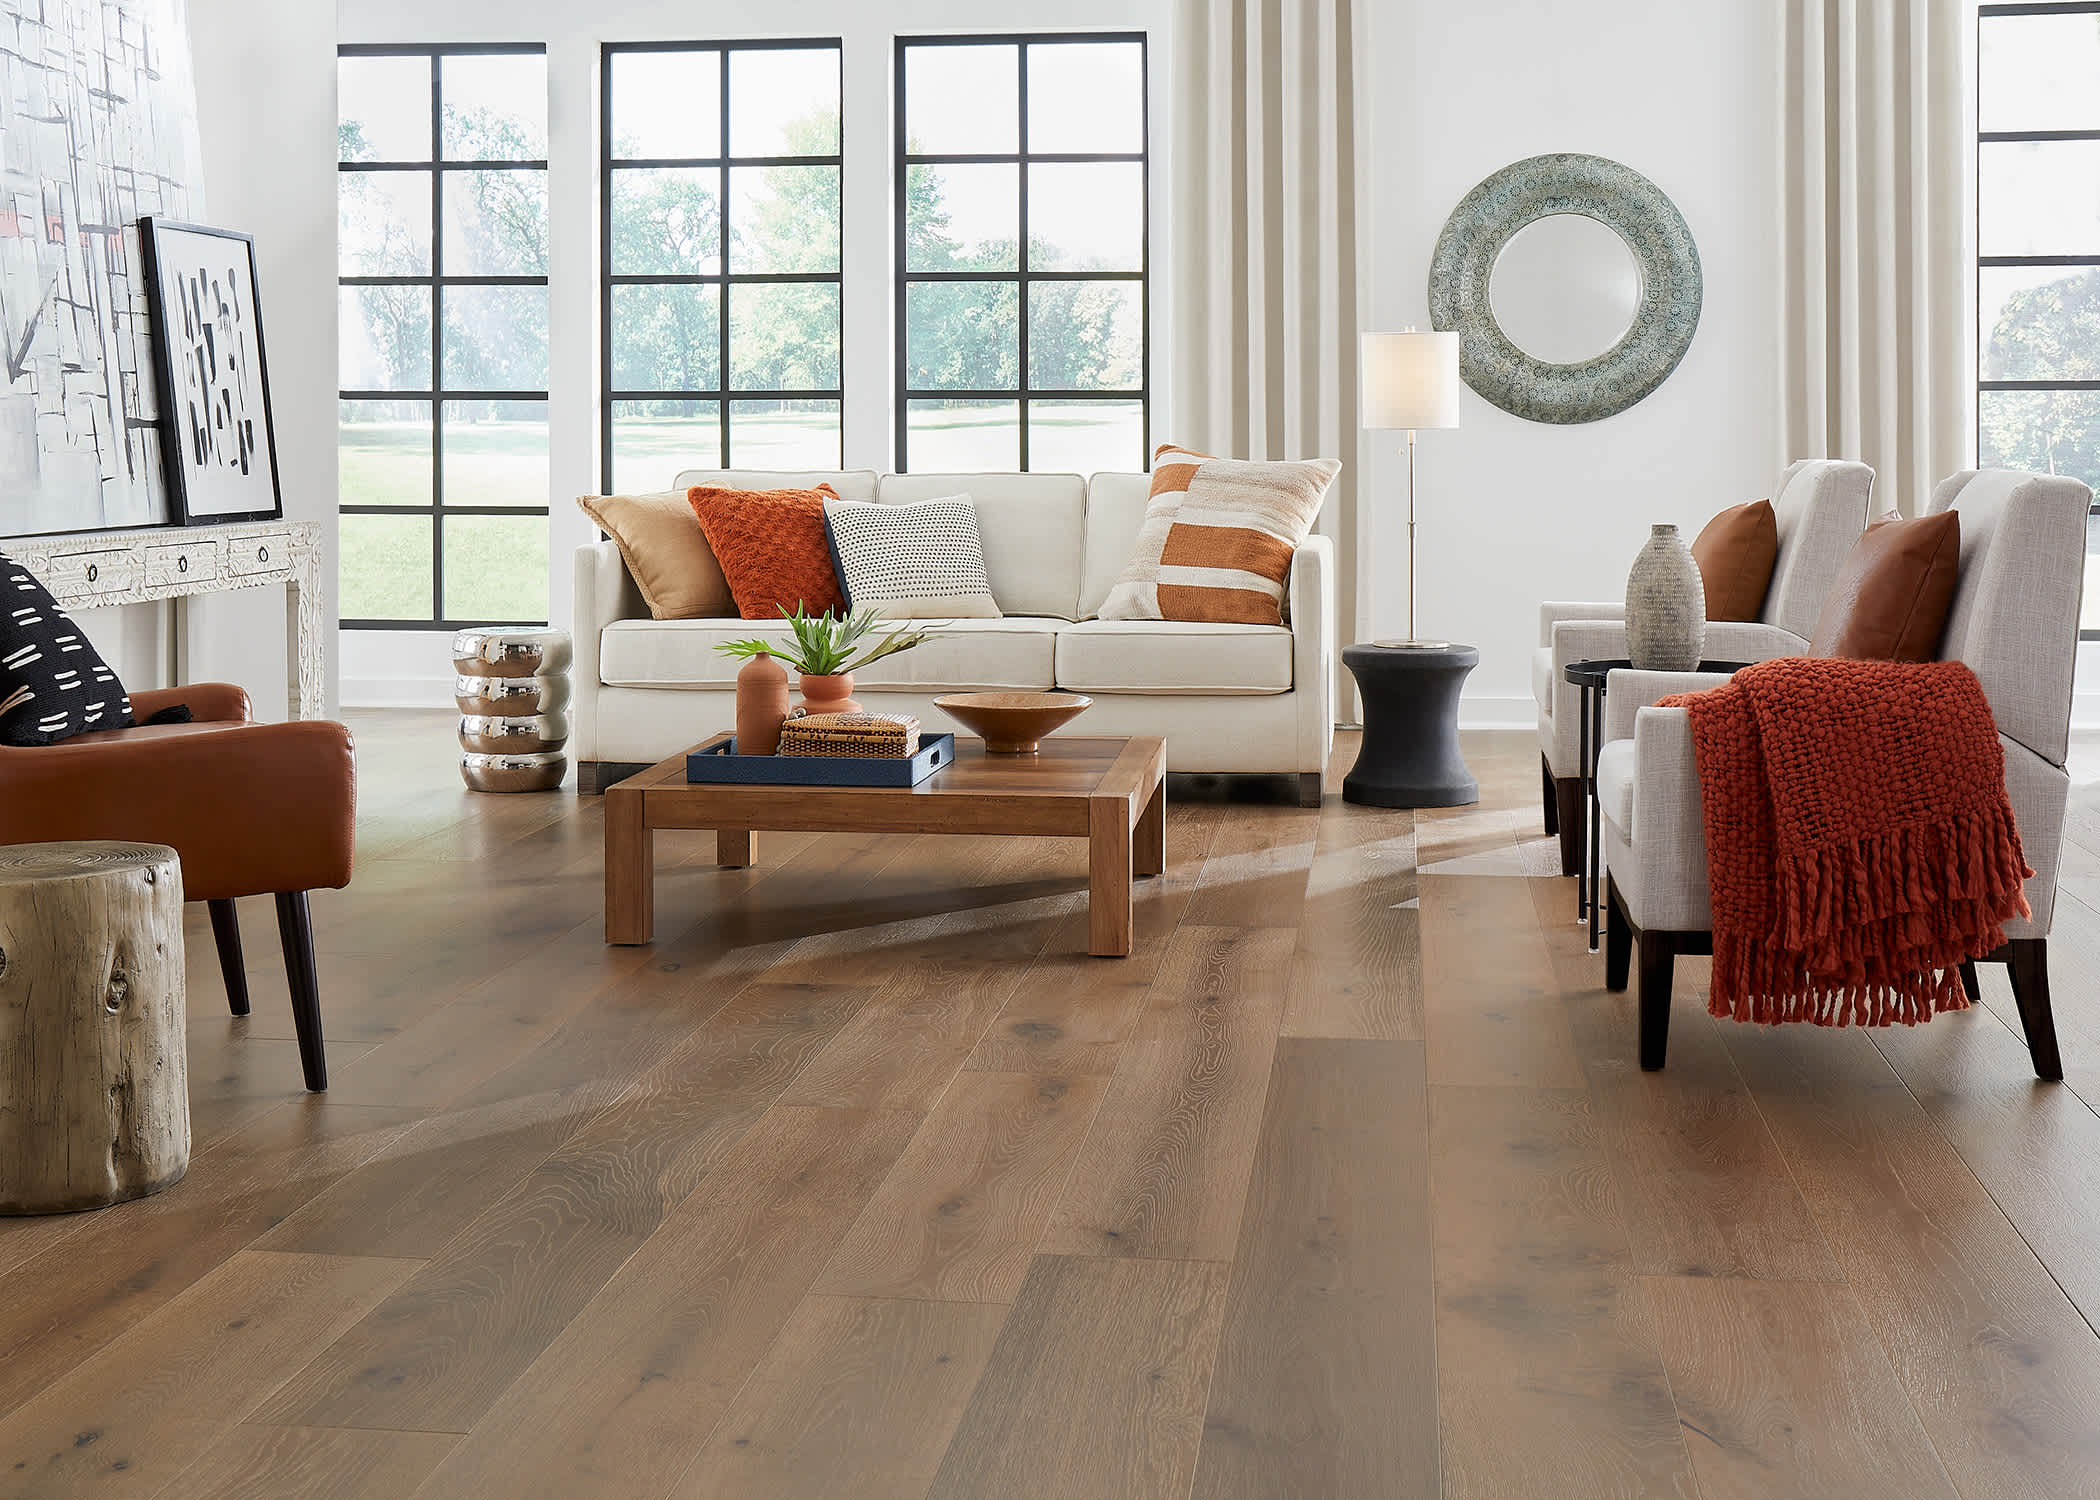 Amelia Island Engineered Hardwood Flooring installed in a living room